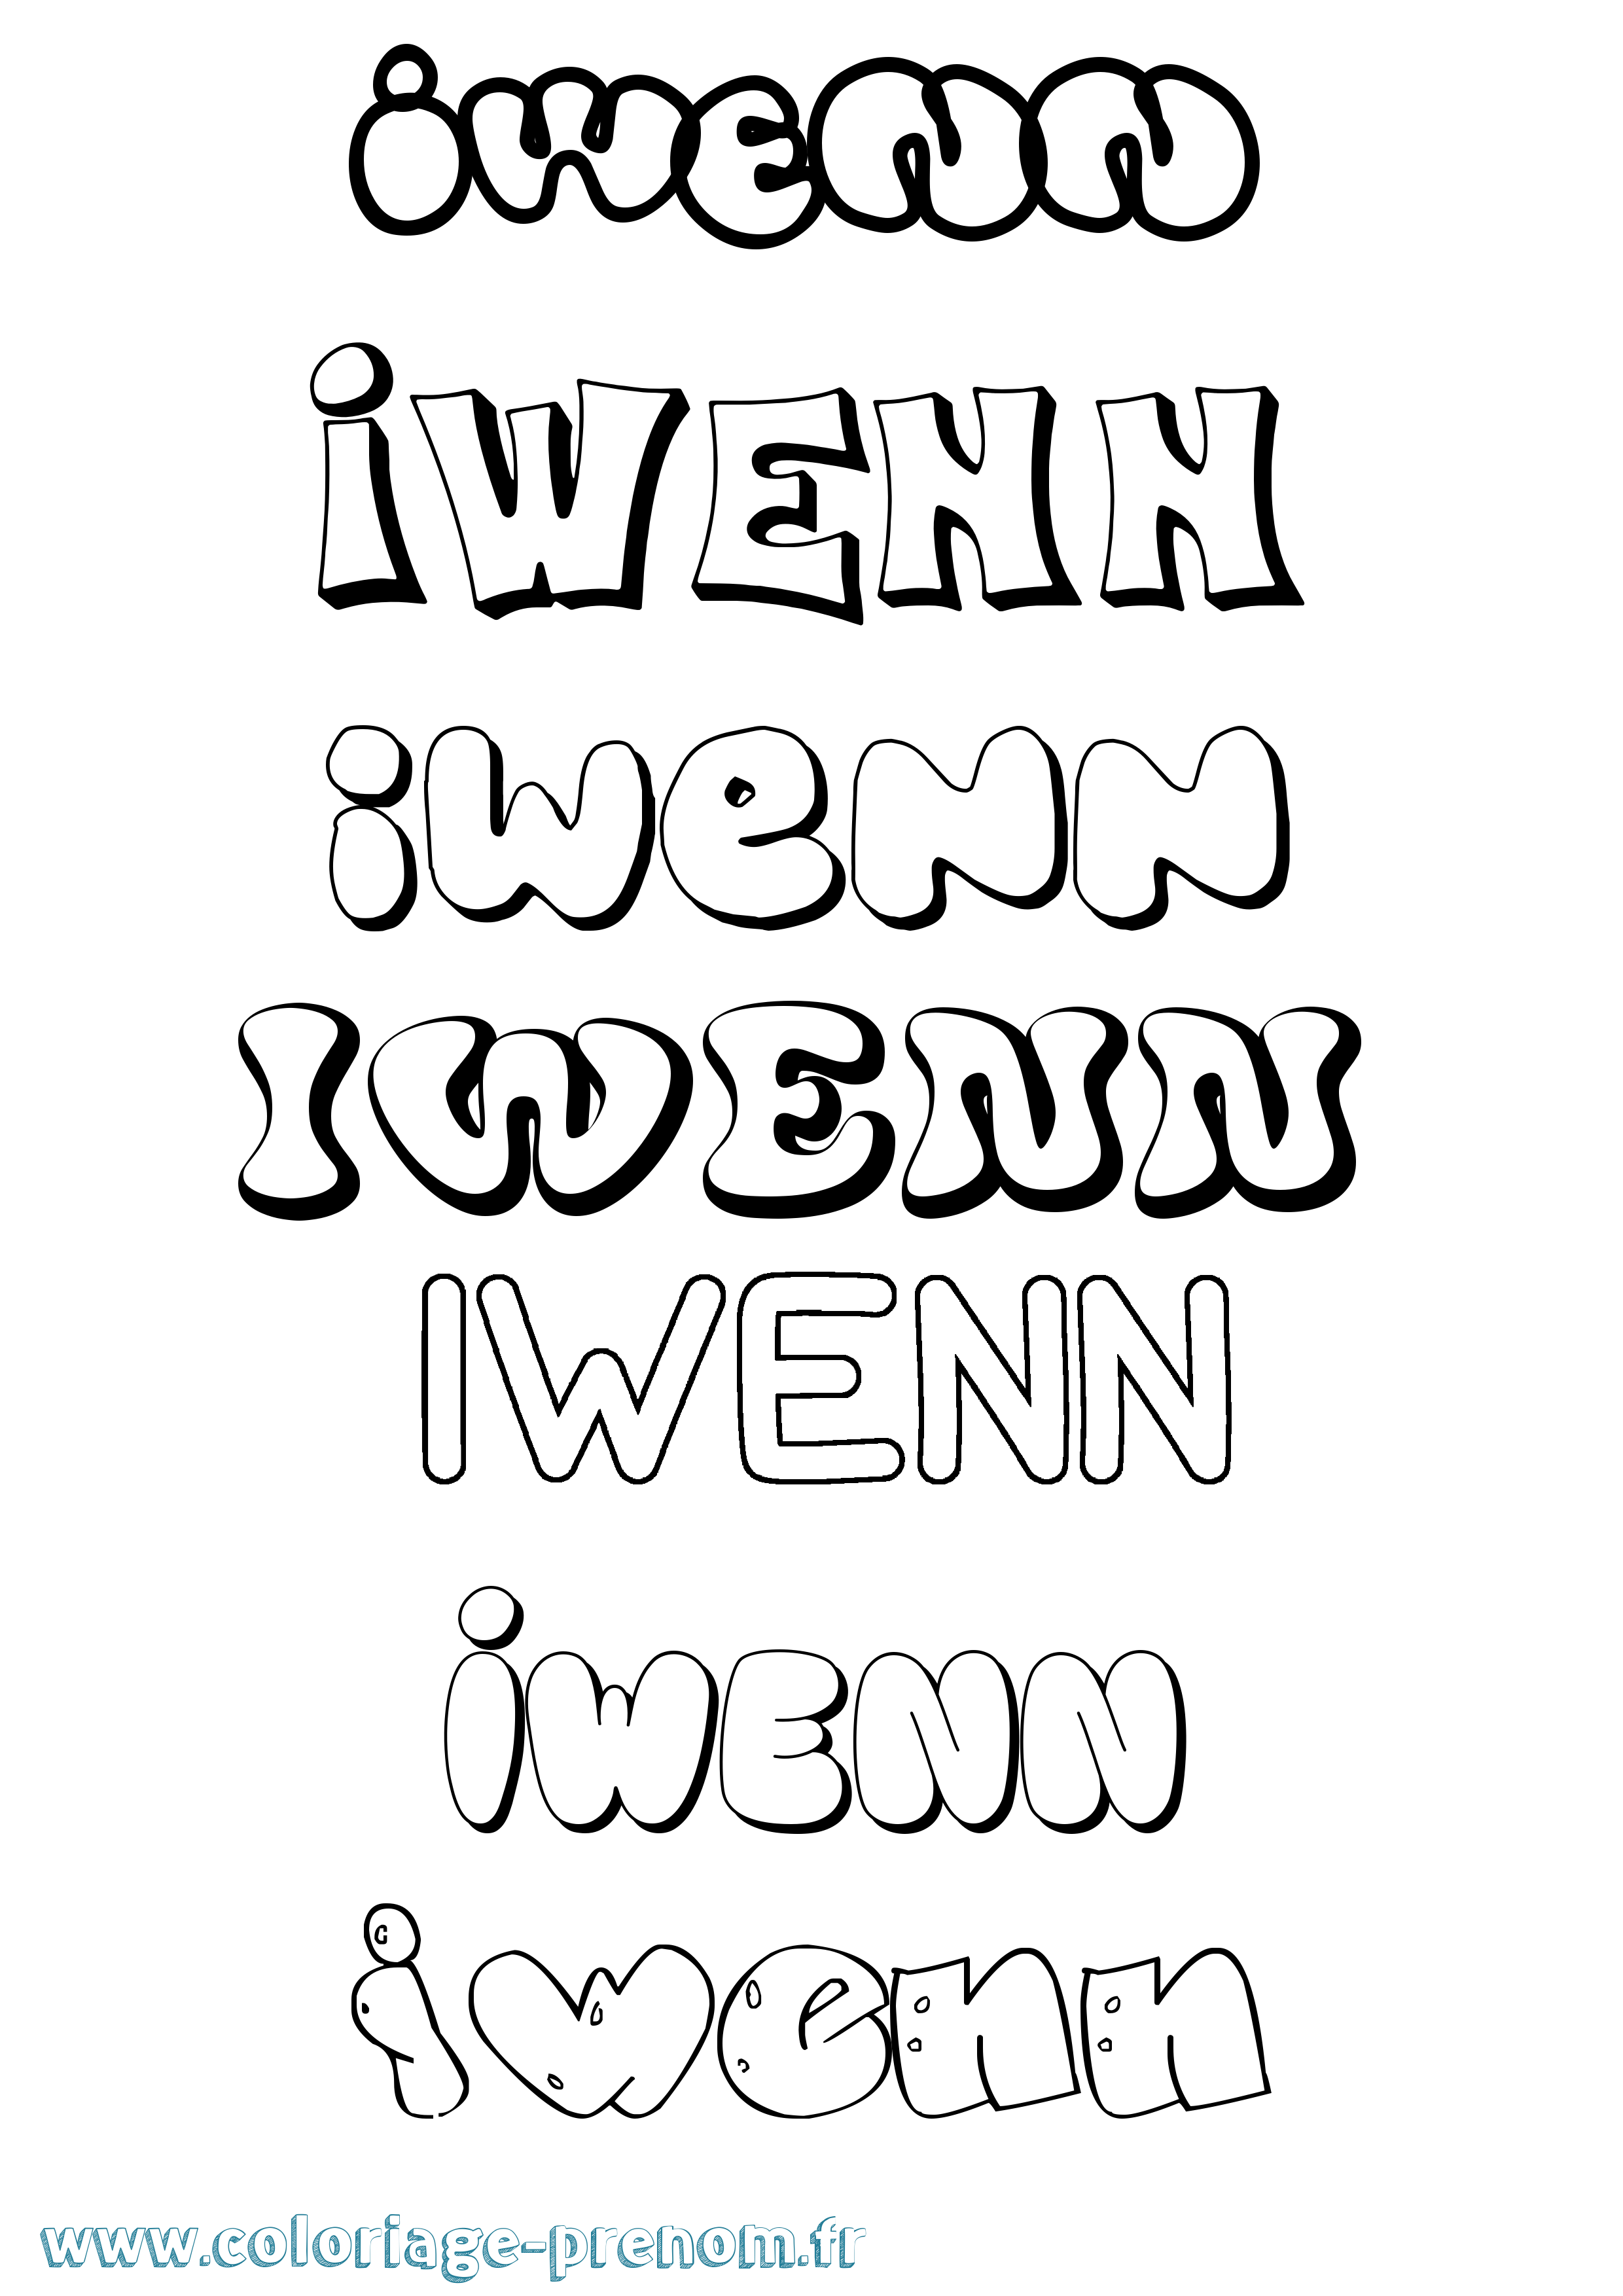 Coloriage prénom Iwenn Bubble